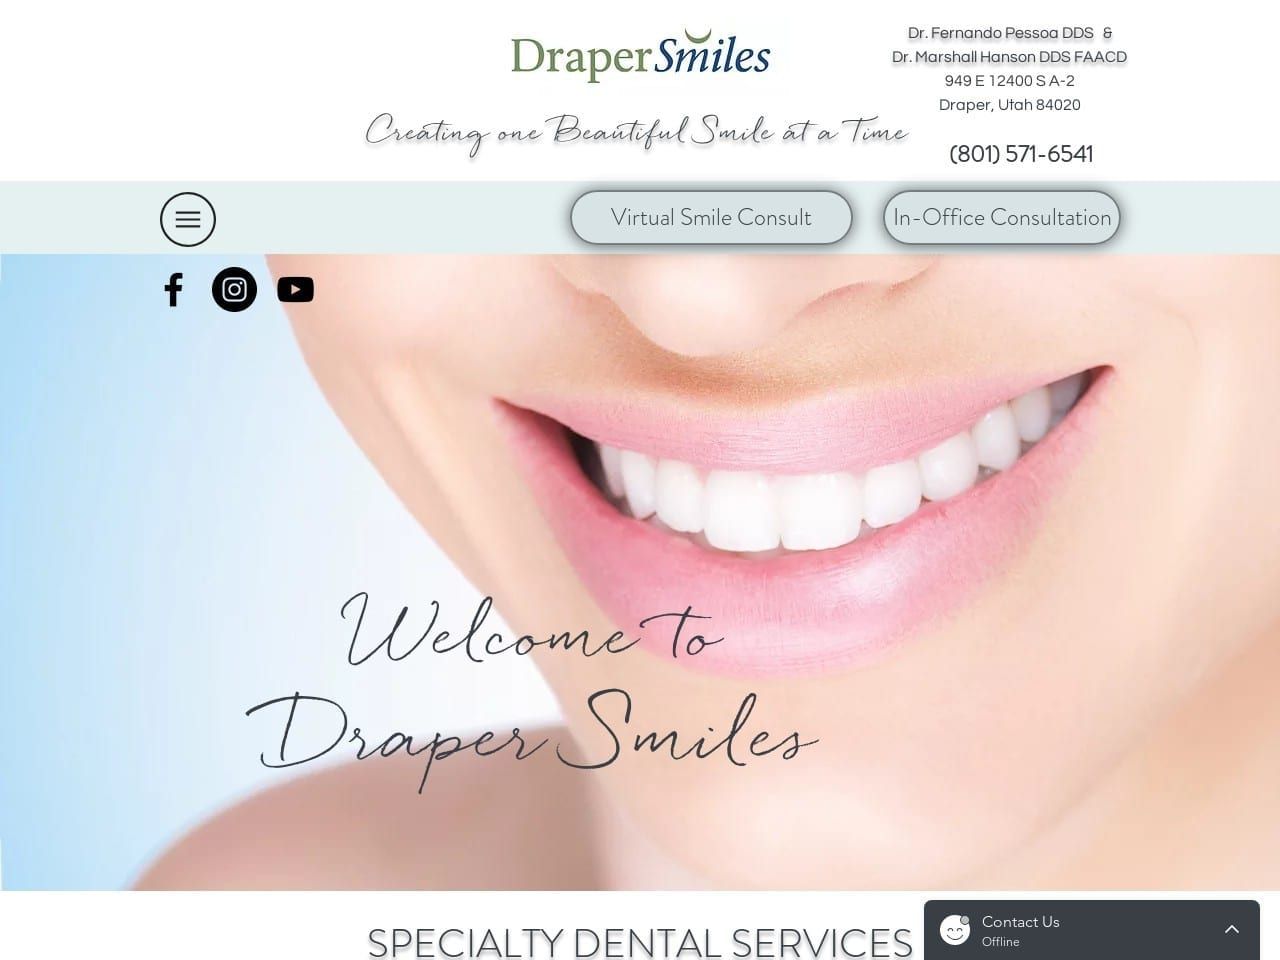 Draper Smiles Website Screenshot from drapersmiles.com